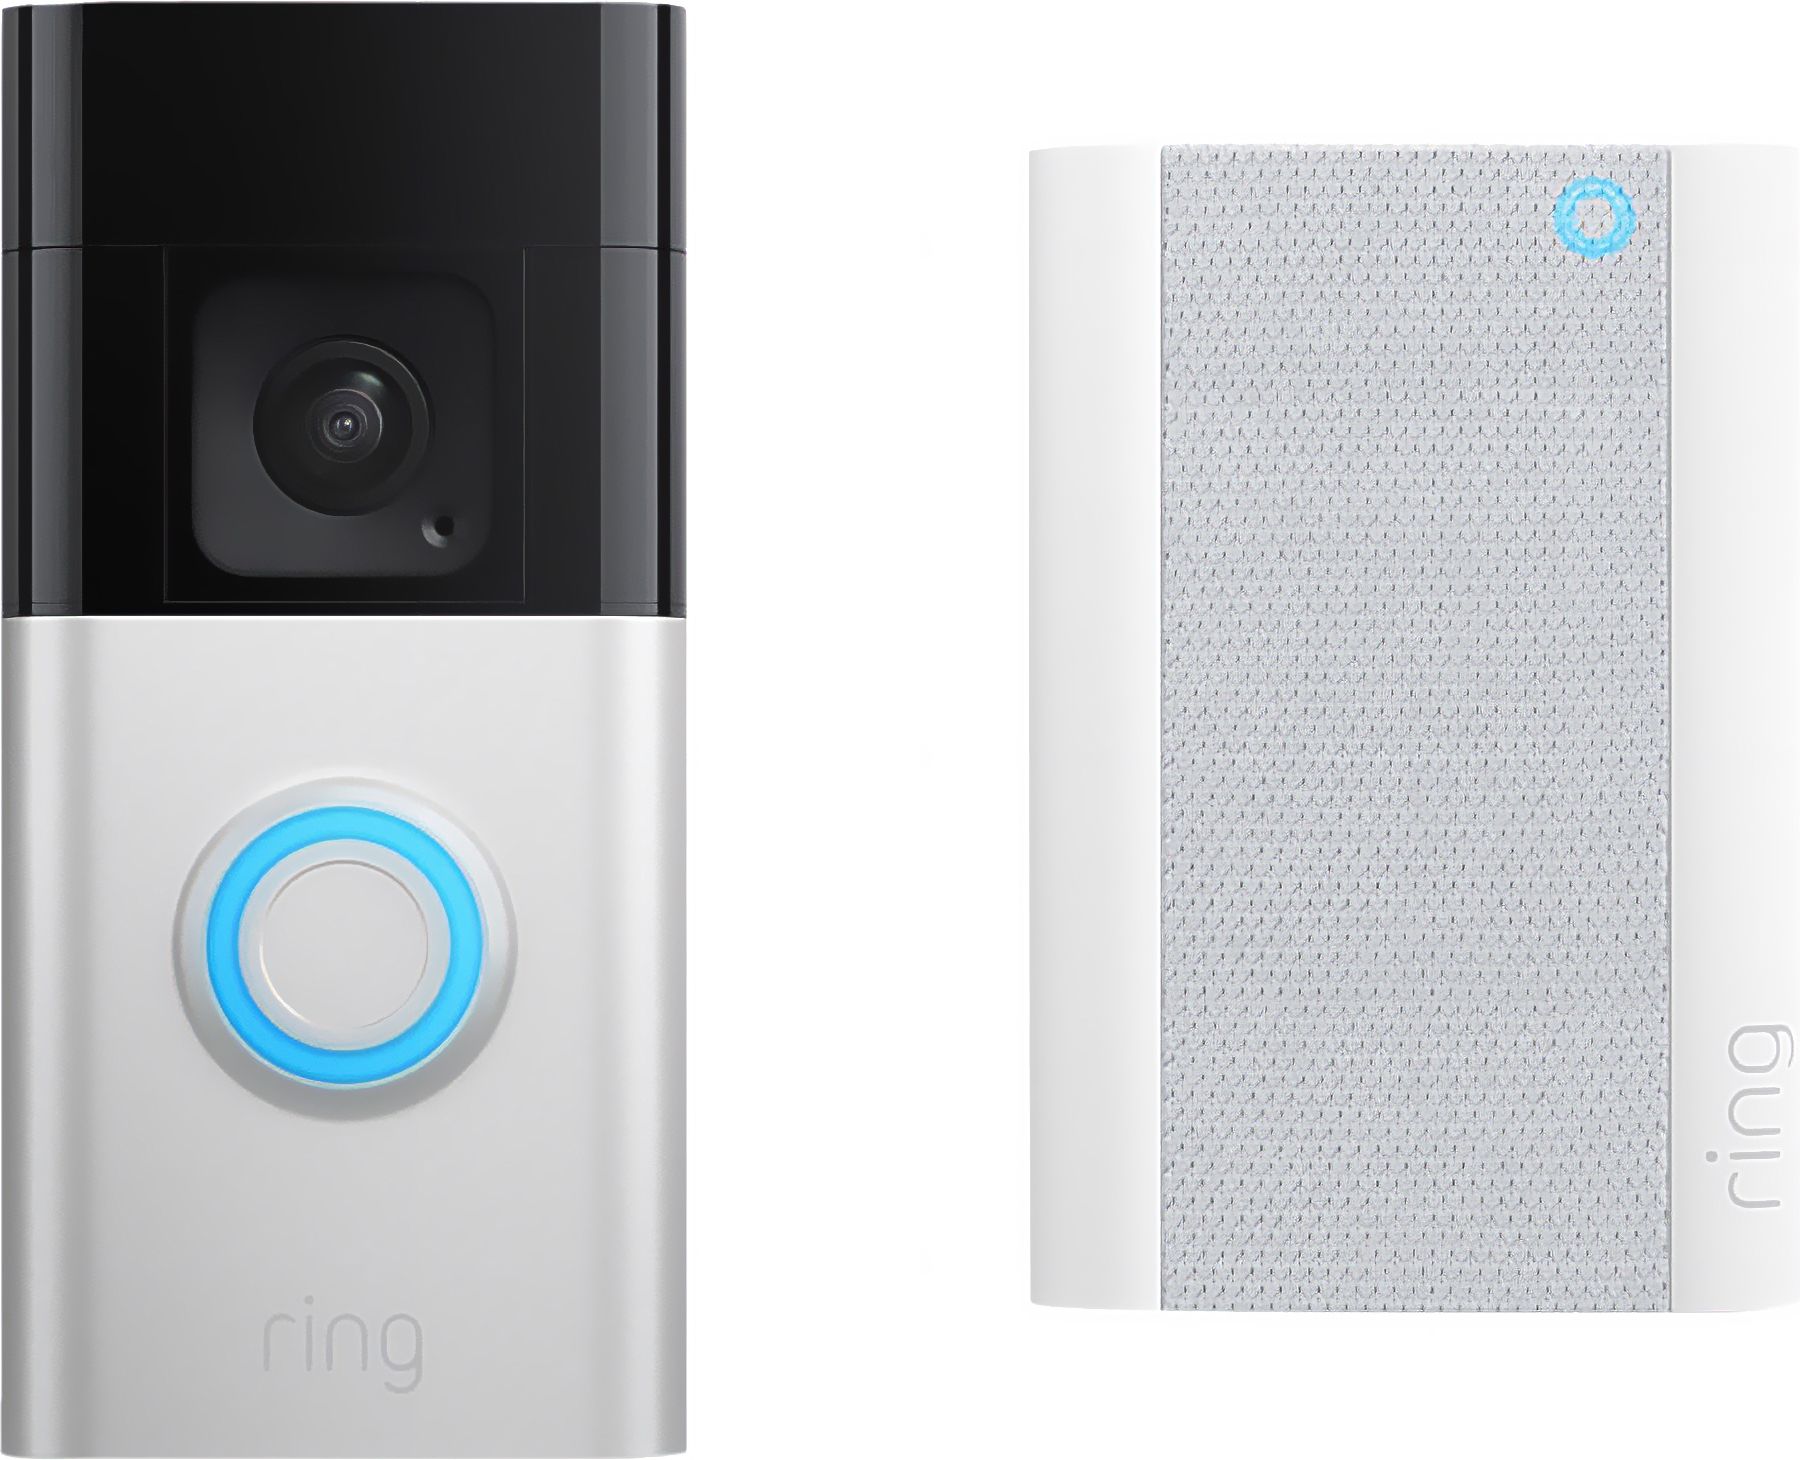 Ring Video Doorbell Plus + Chime Pro Smart Doorbell - Satin Nickel, Aluminium